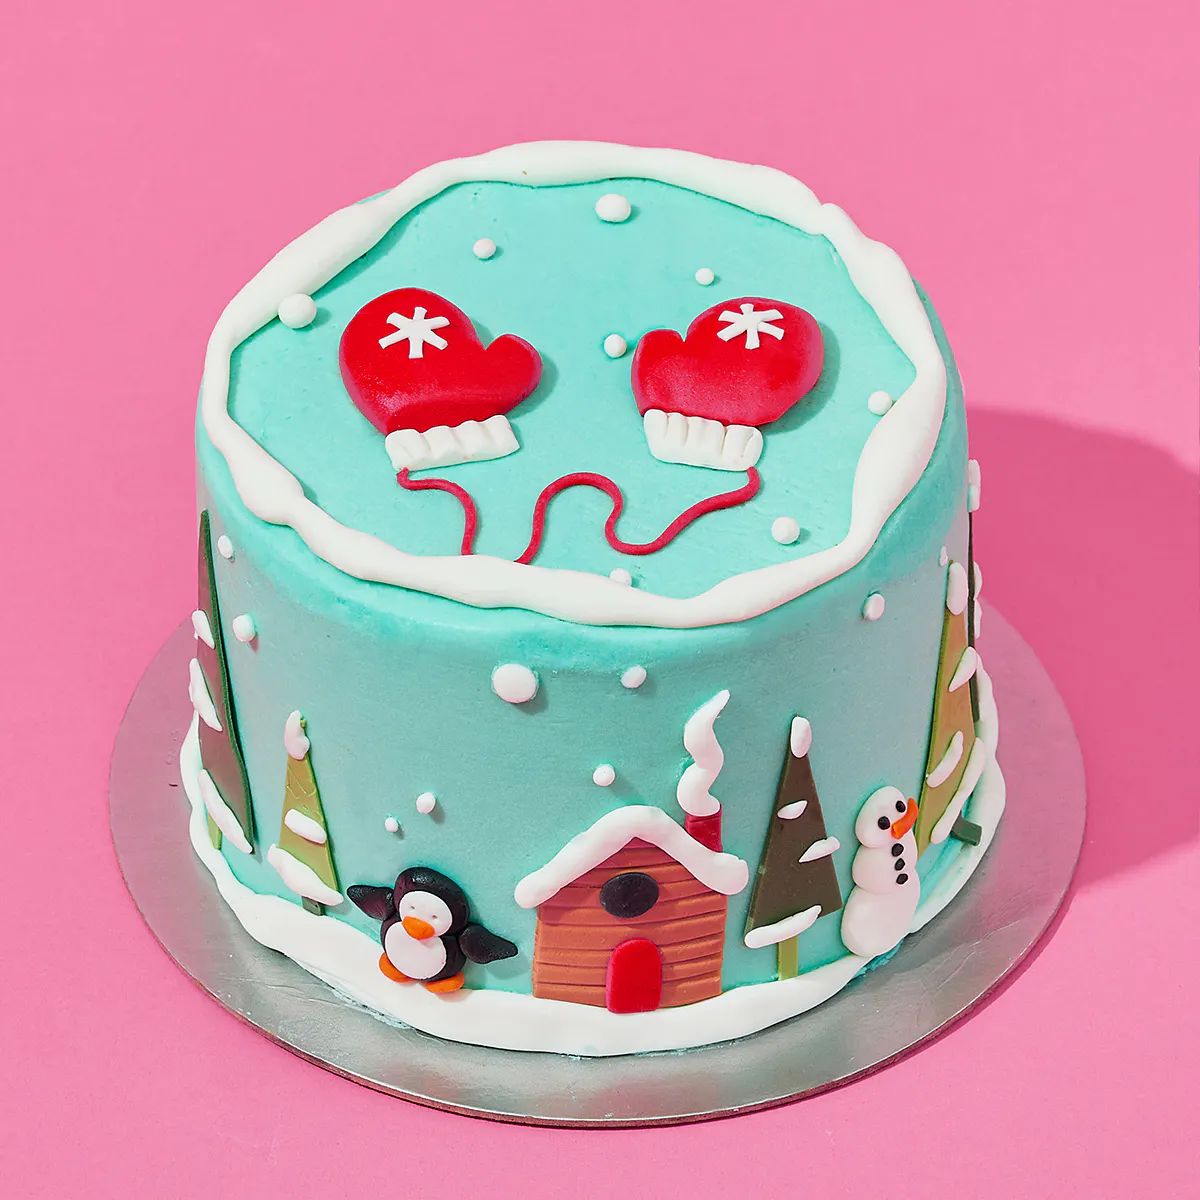 Winter Wonderland Cake DIY Kit by Charm City Cakes | Goldbelly